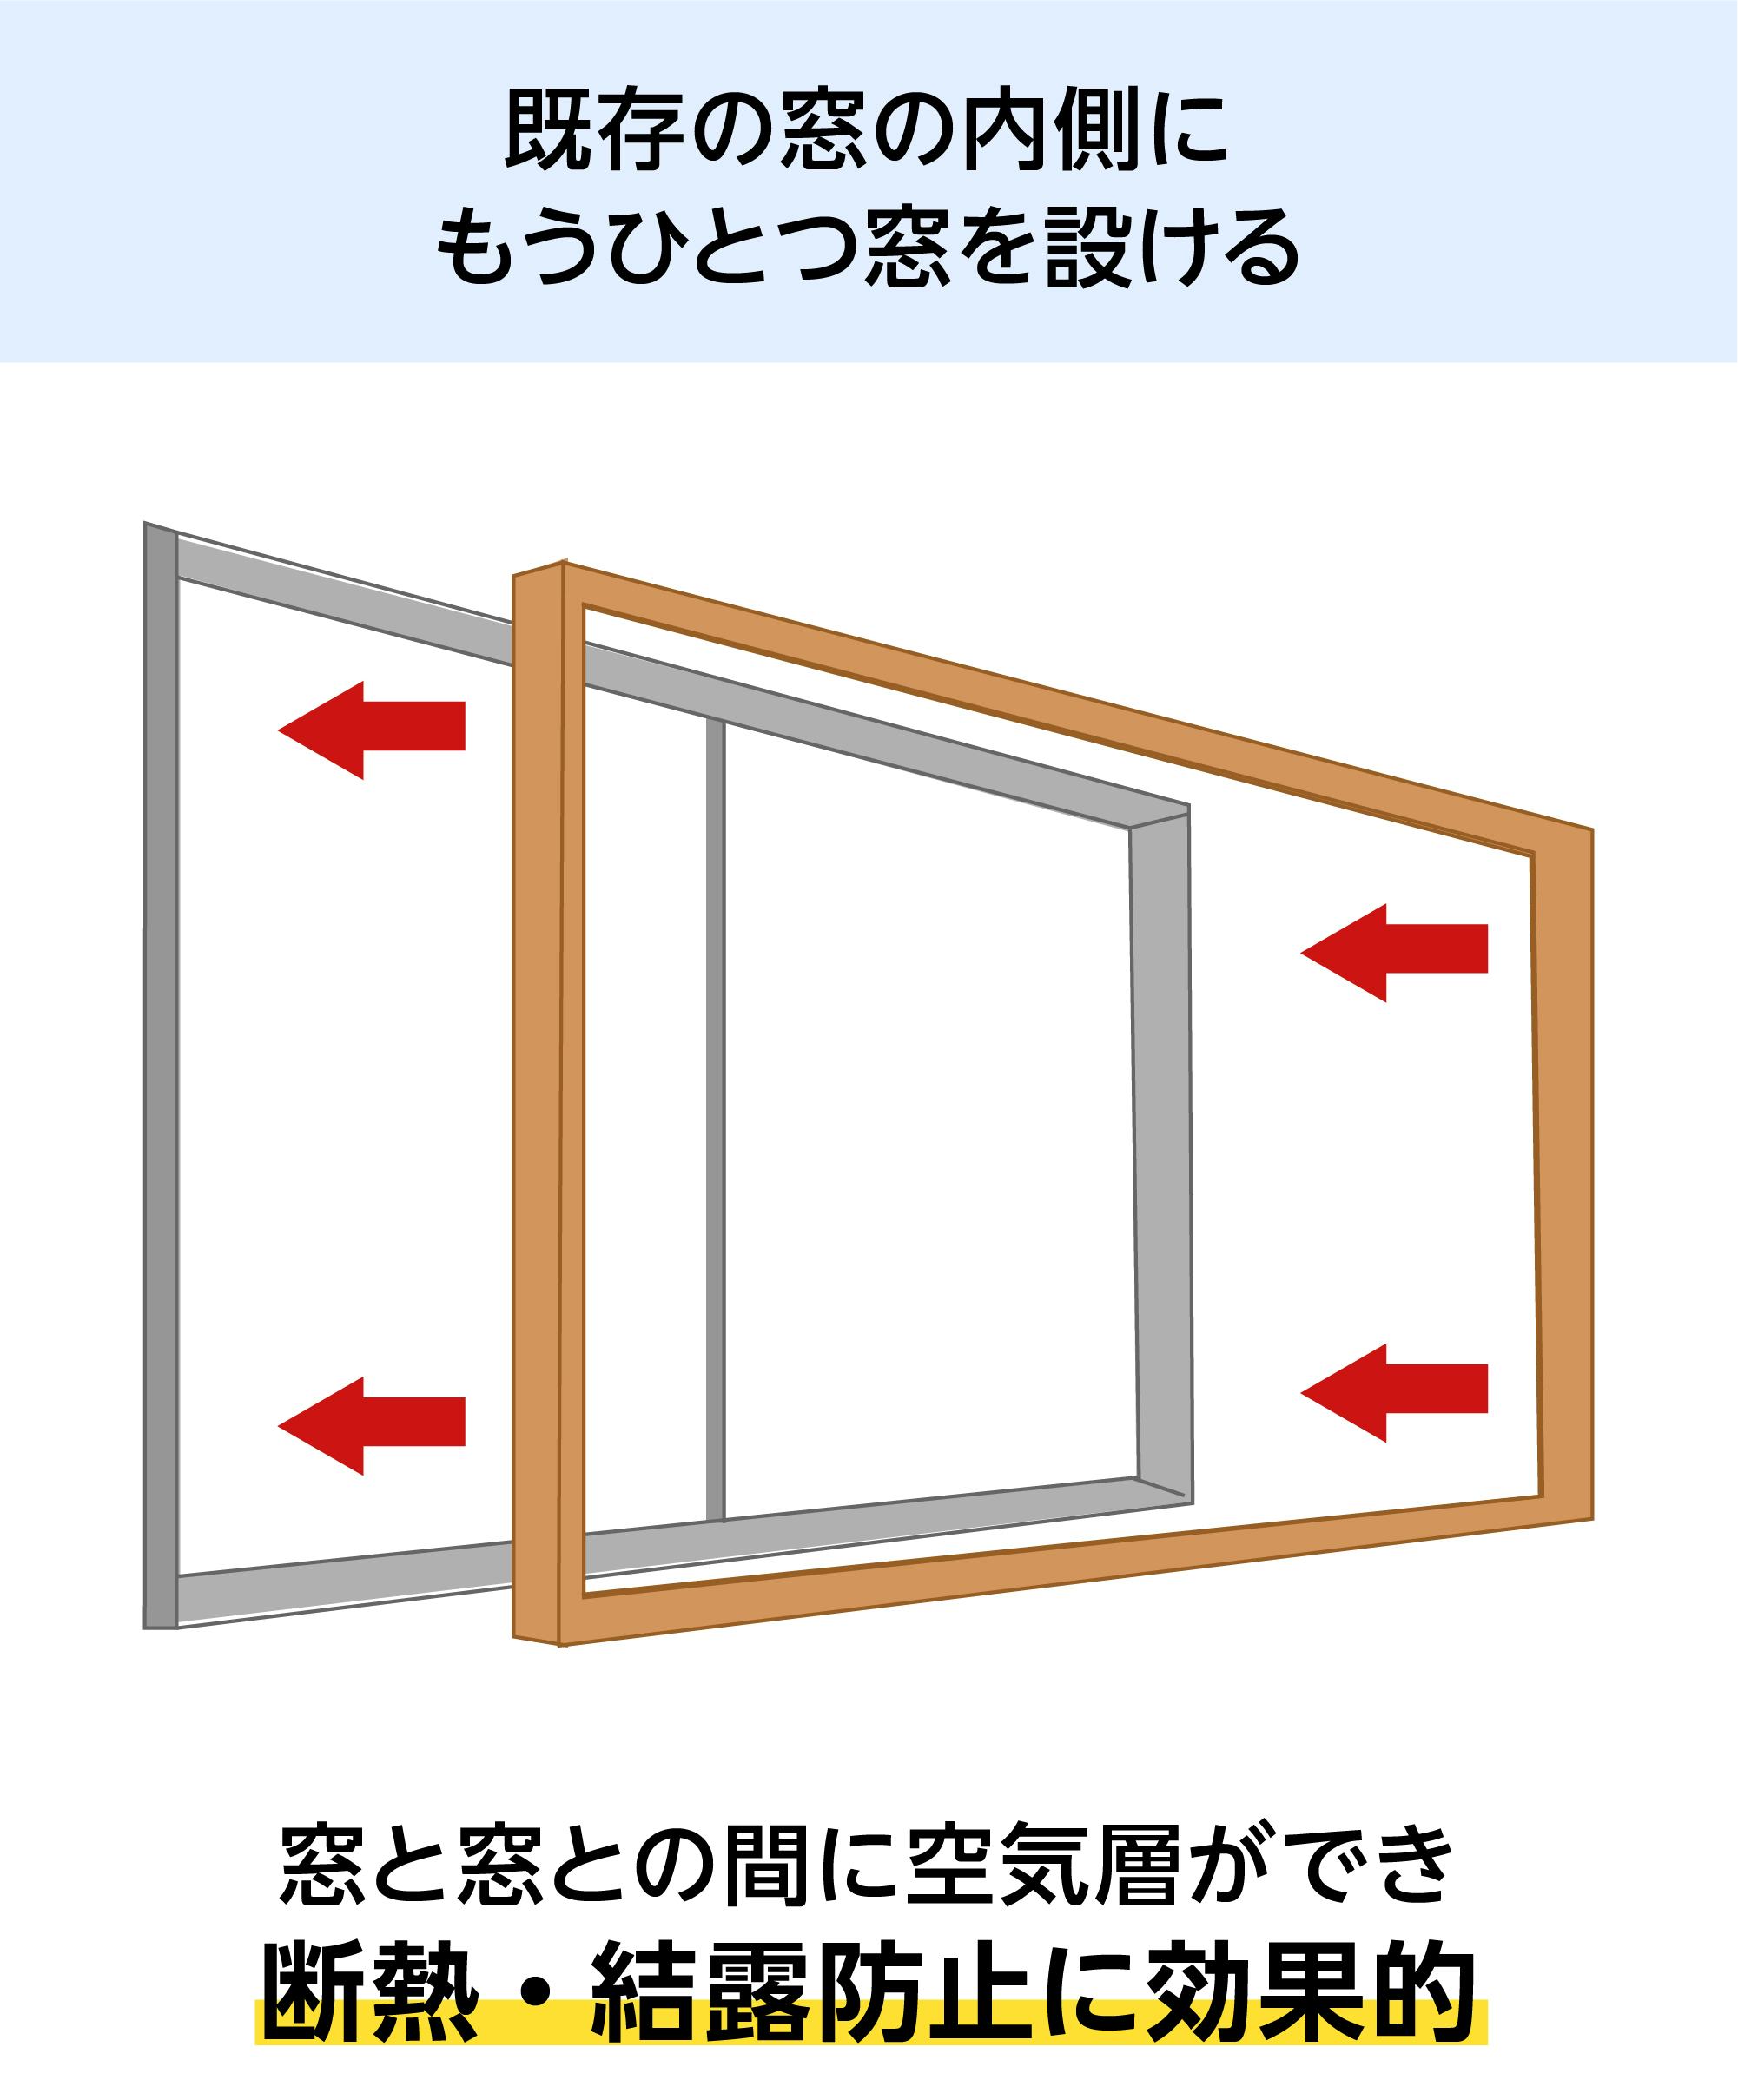 LIXILの内窓「インプラス」浴室仕様 (タイル納まり) 引違い窓 - 既存の窓の内側にもうひとつ窓を設ける